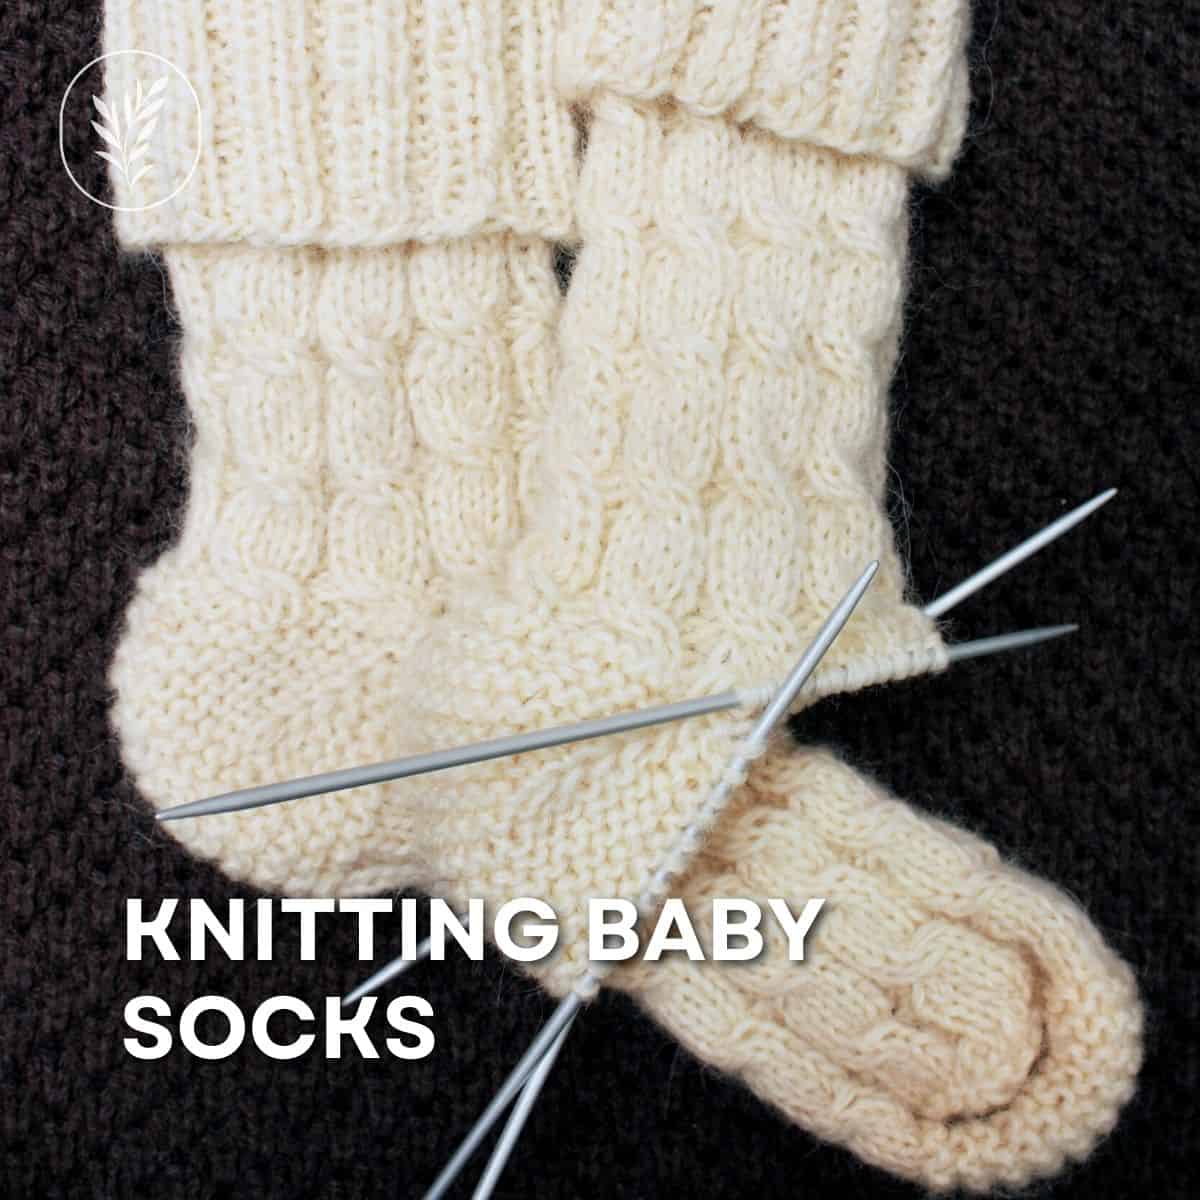 Knitting baby socks via @home4theharvest